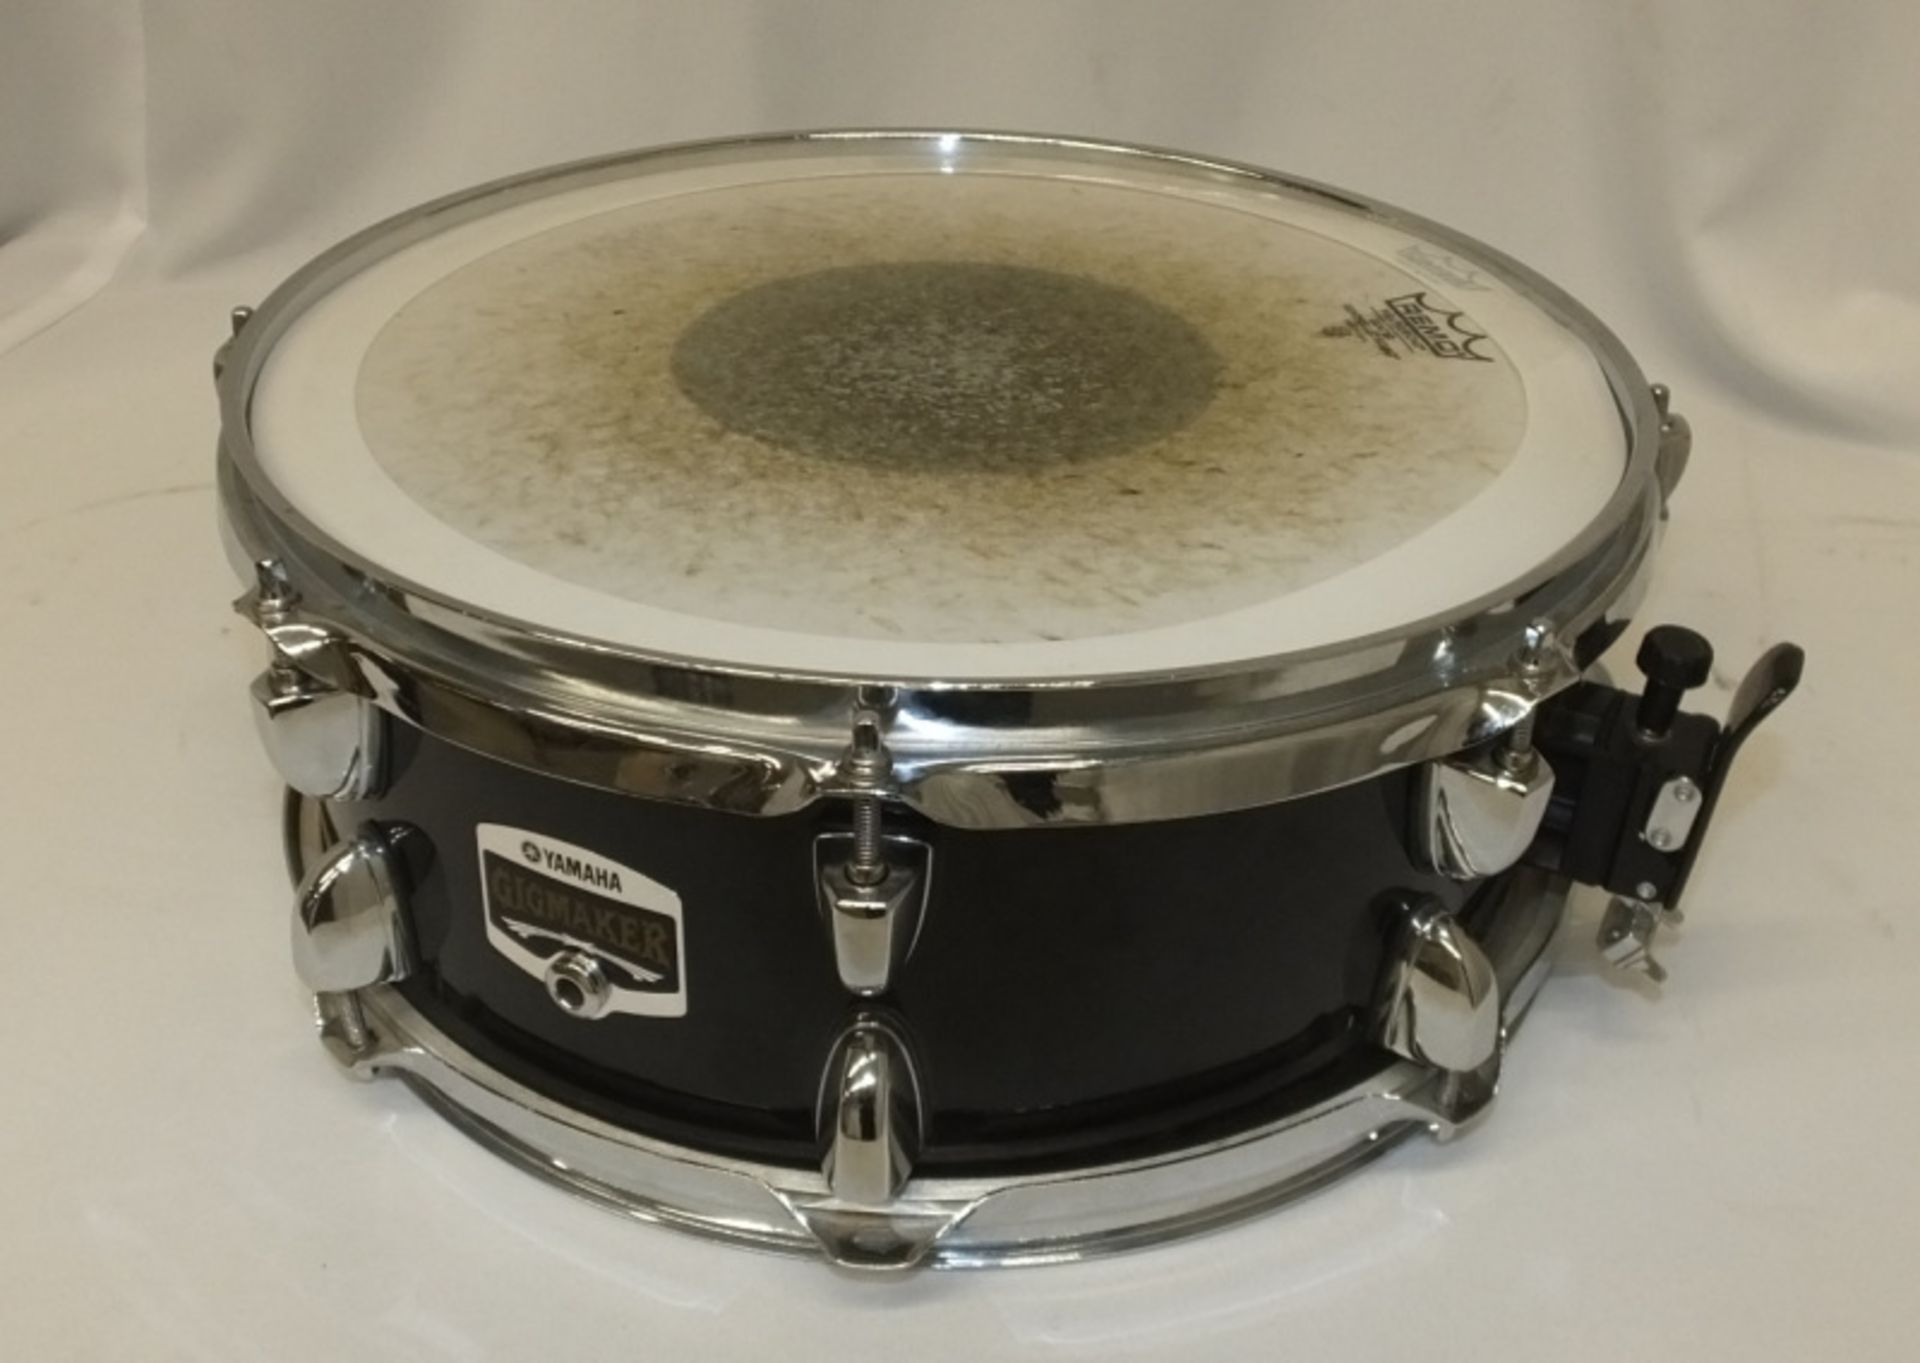 Yamaha Gigmaker Drum Kit - details in the description - Image 17 of 31